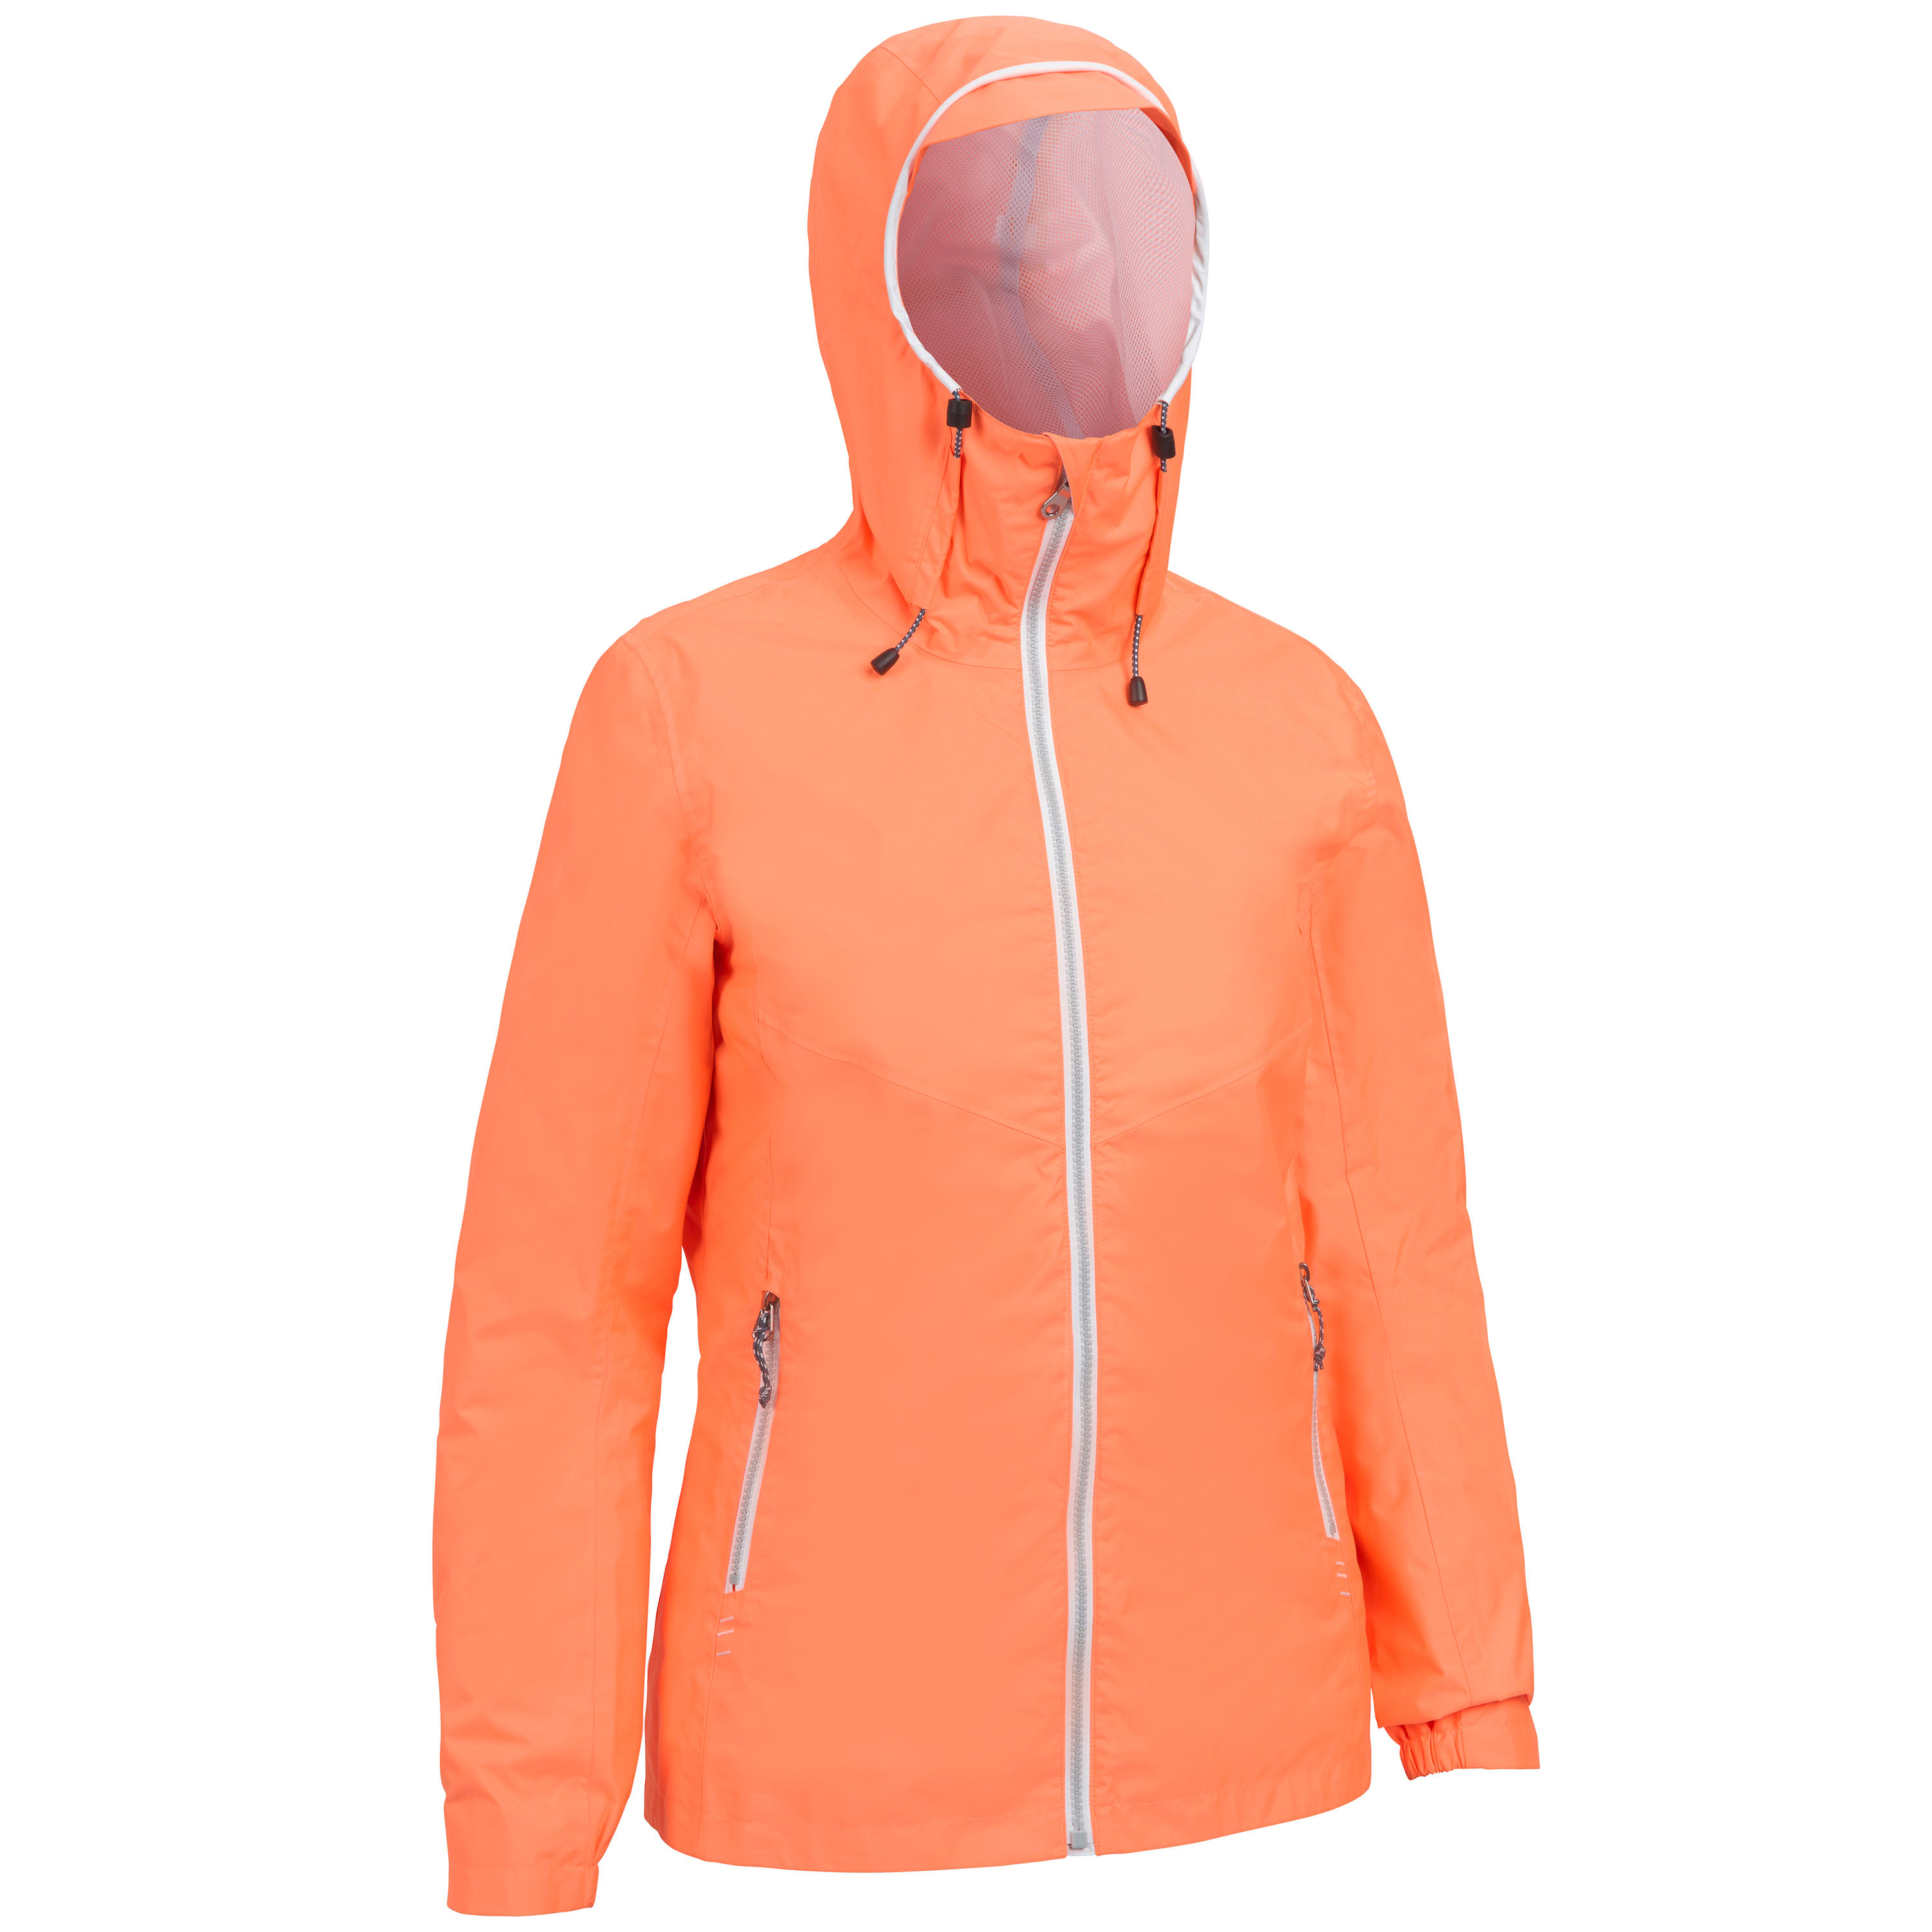 TRIBORD Women's waterproof sailing jacket 100 - Neon coral